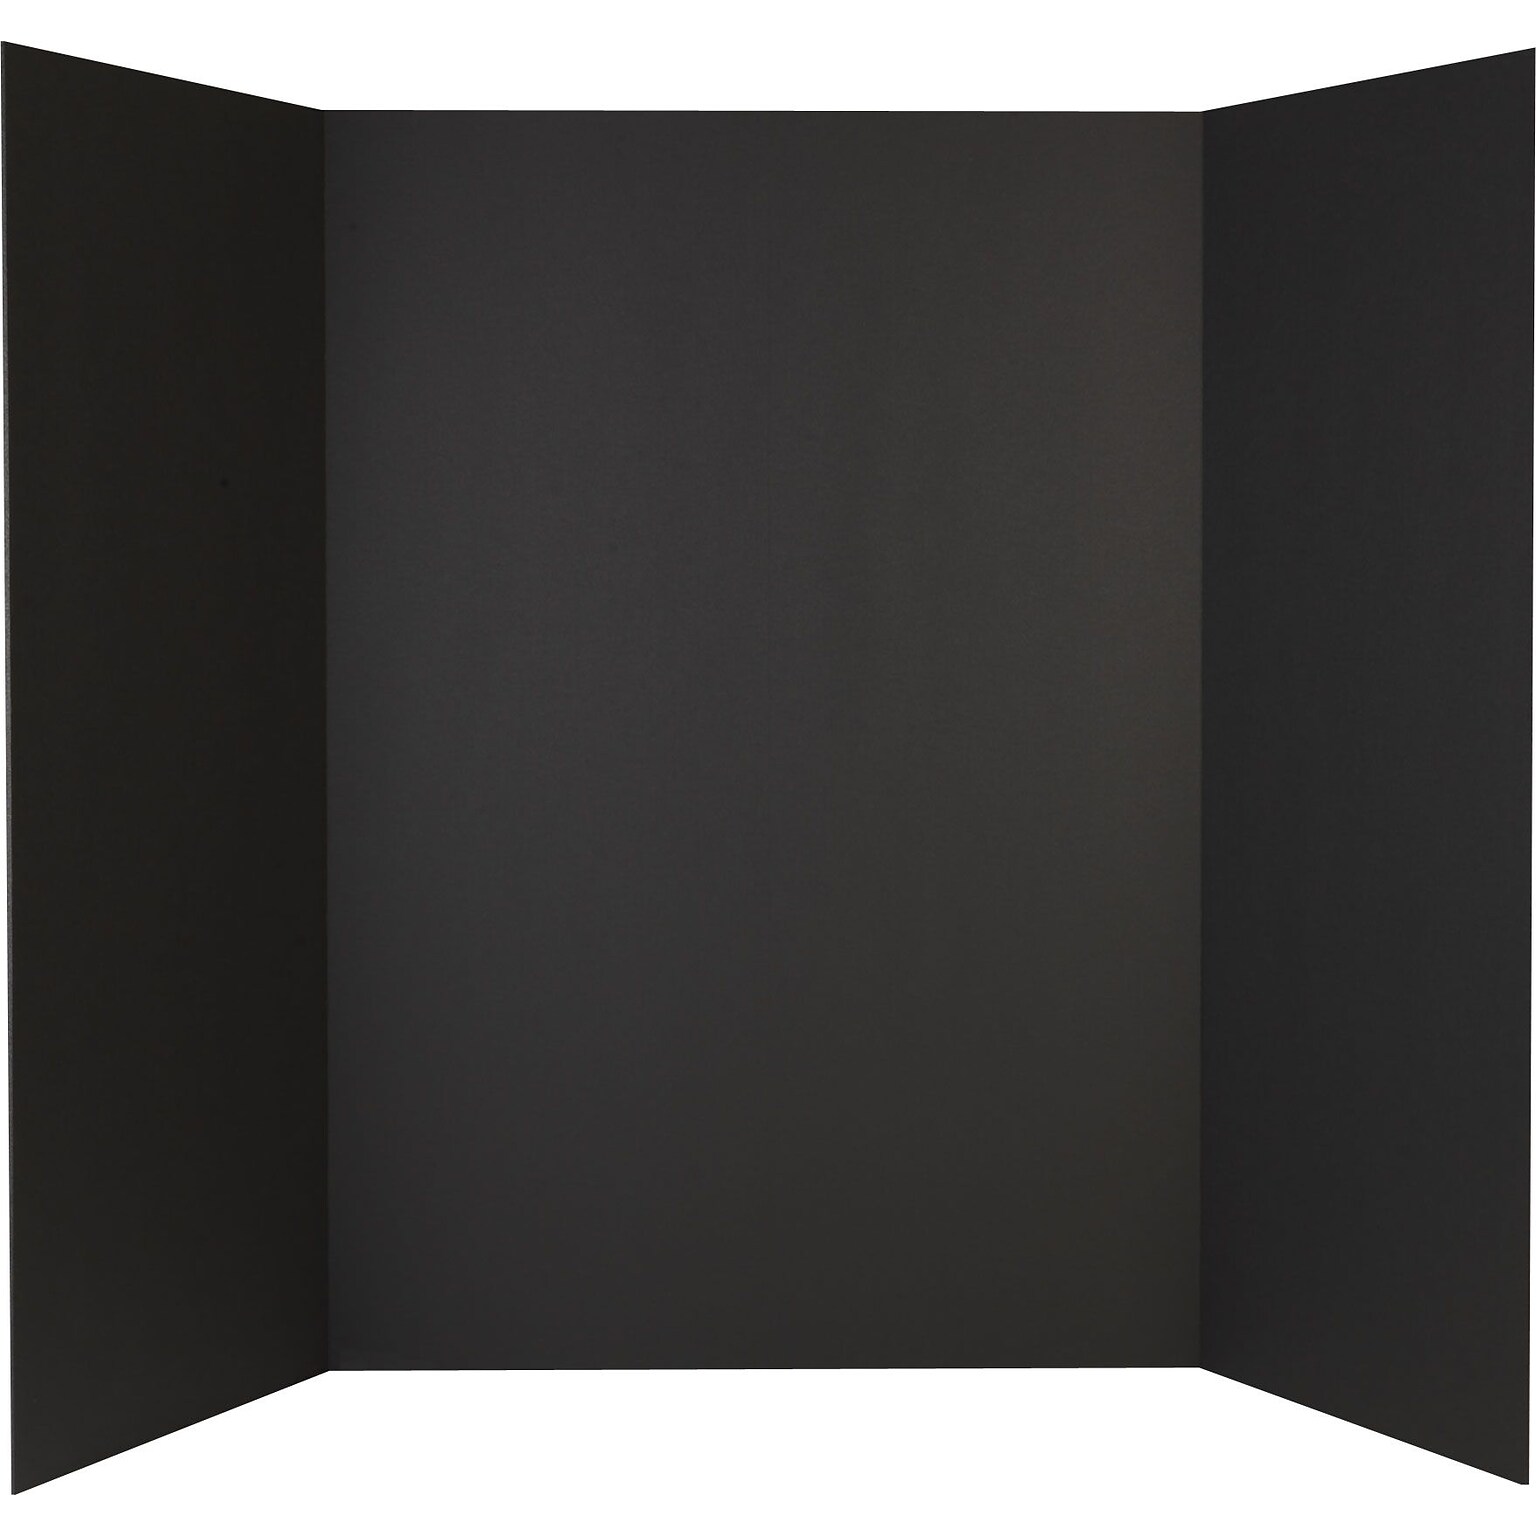 Staples® Tri-Fold Foam Presentation Board, 4x3, Black (902091)